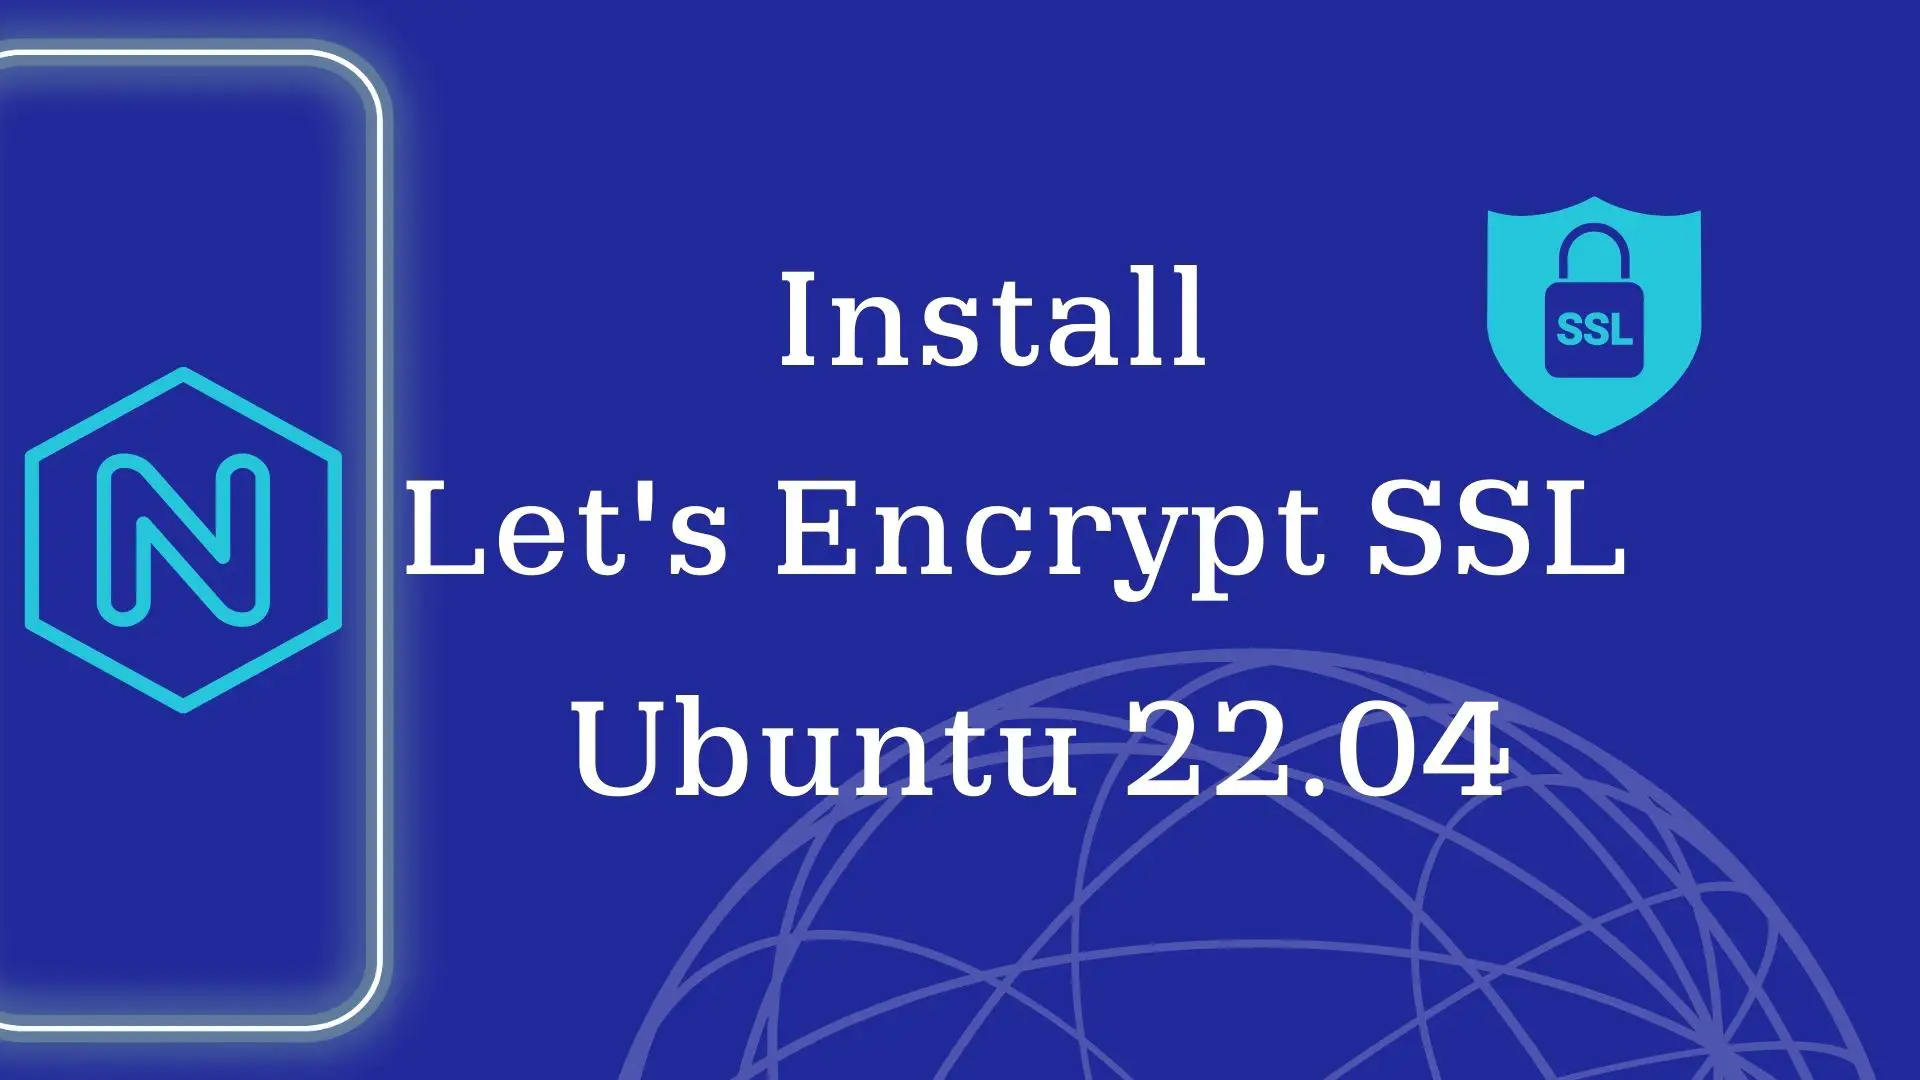 Install Let's Encrypt SSL in Nginx on Ubuntu 22.04